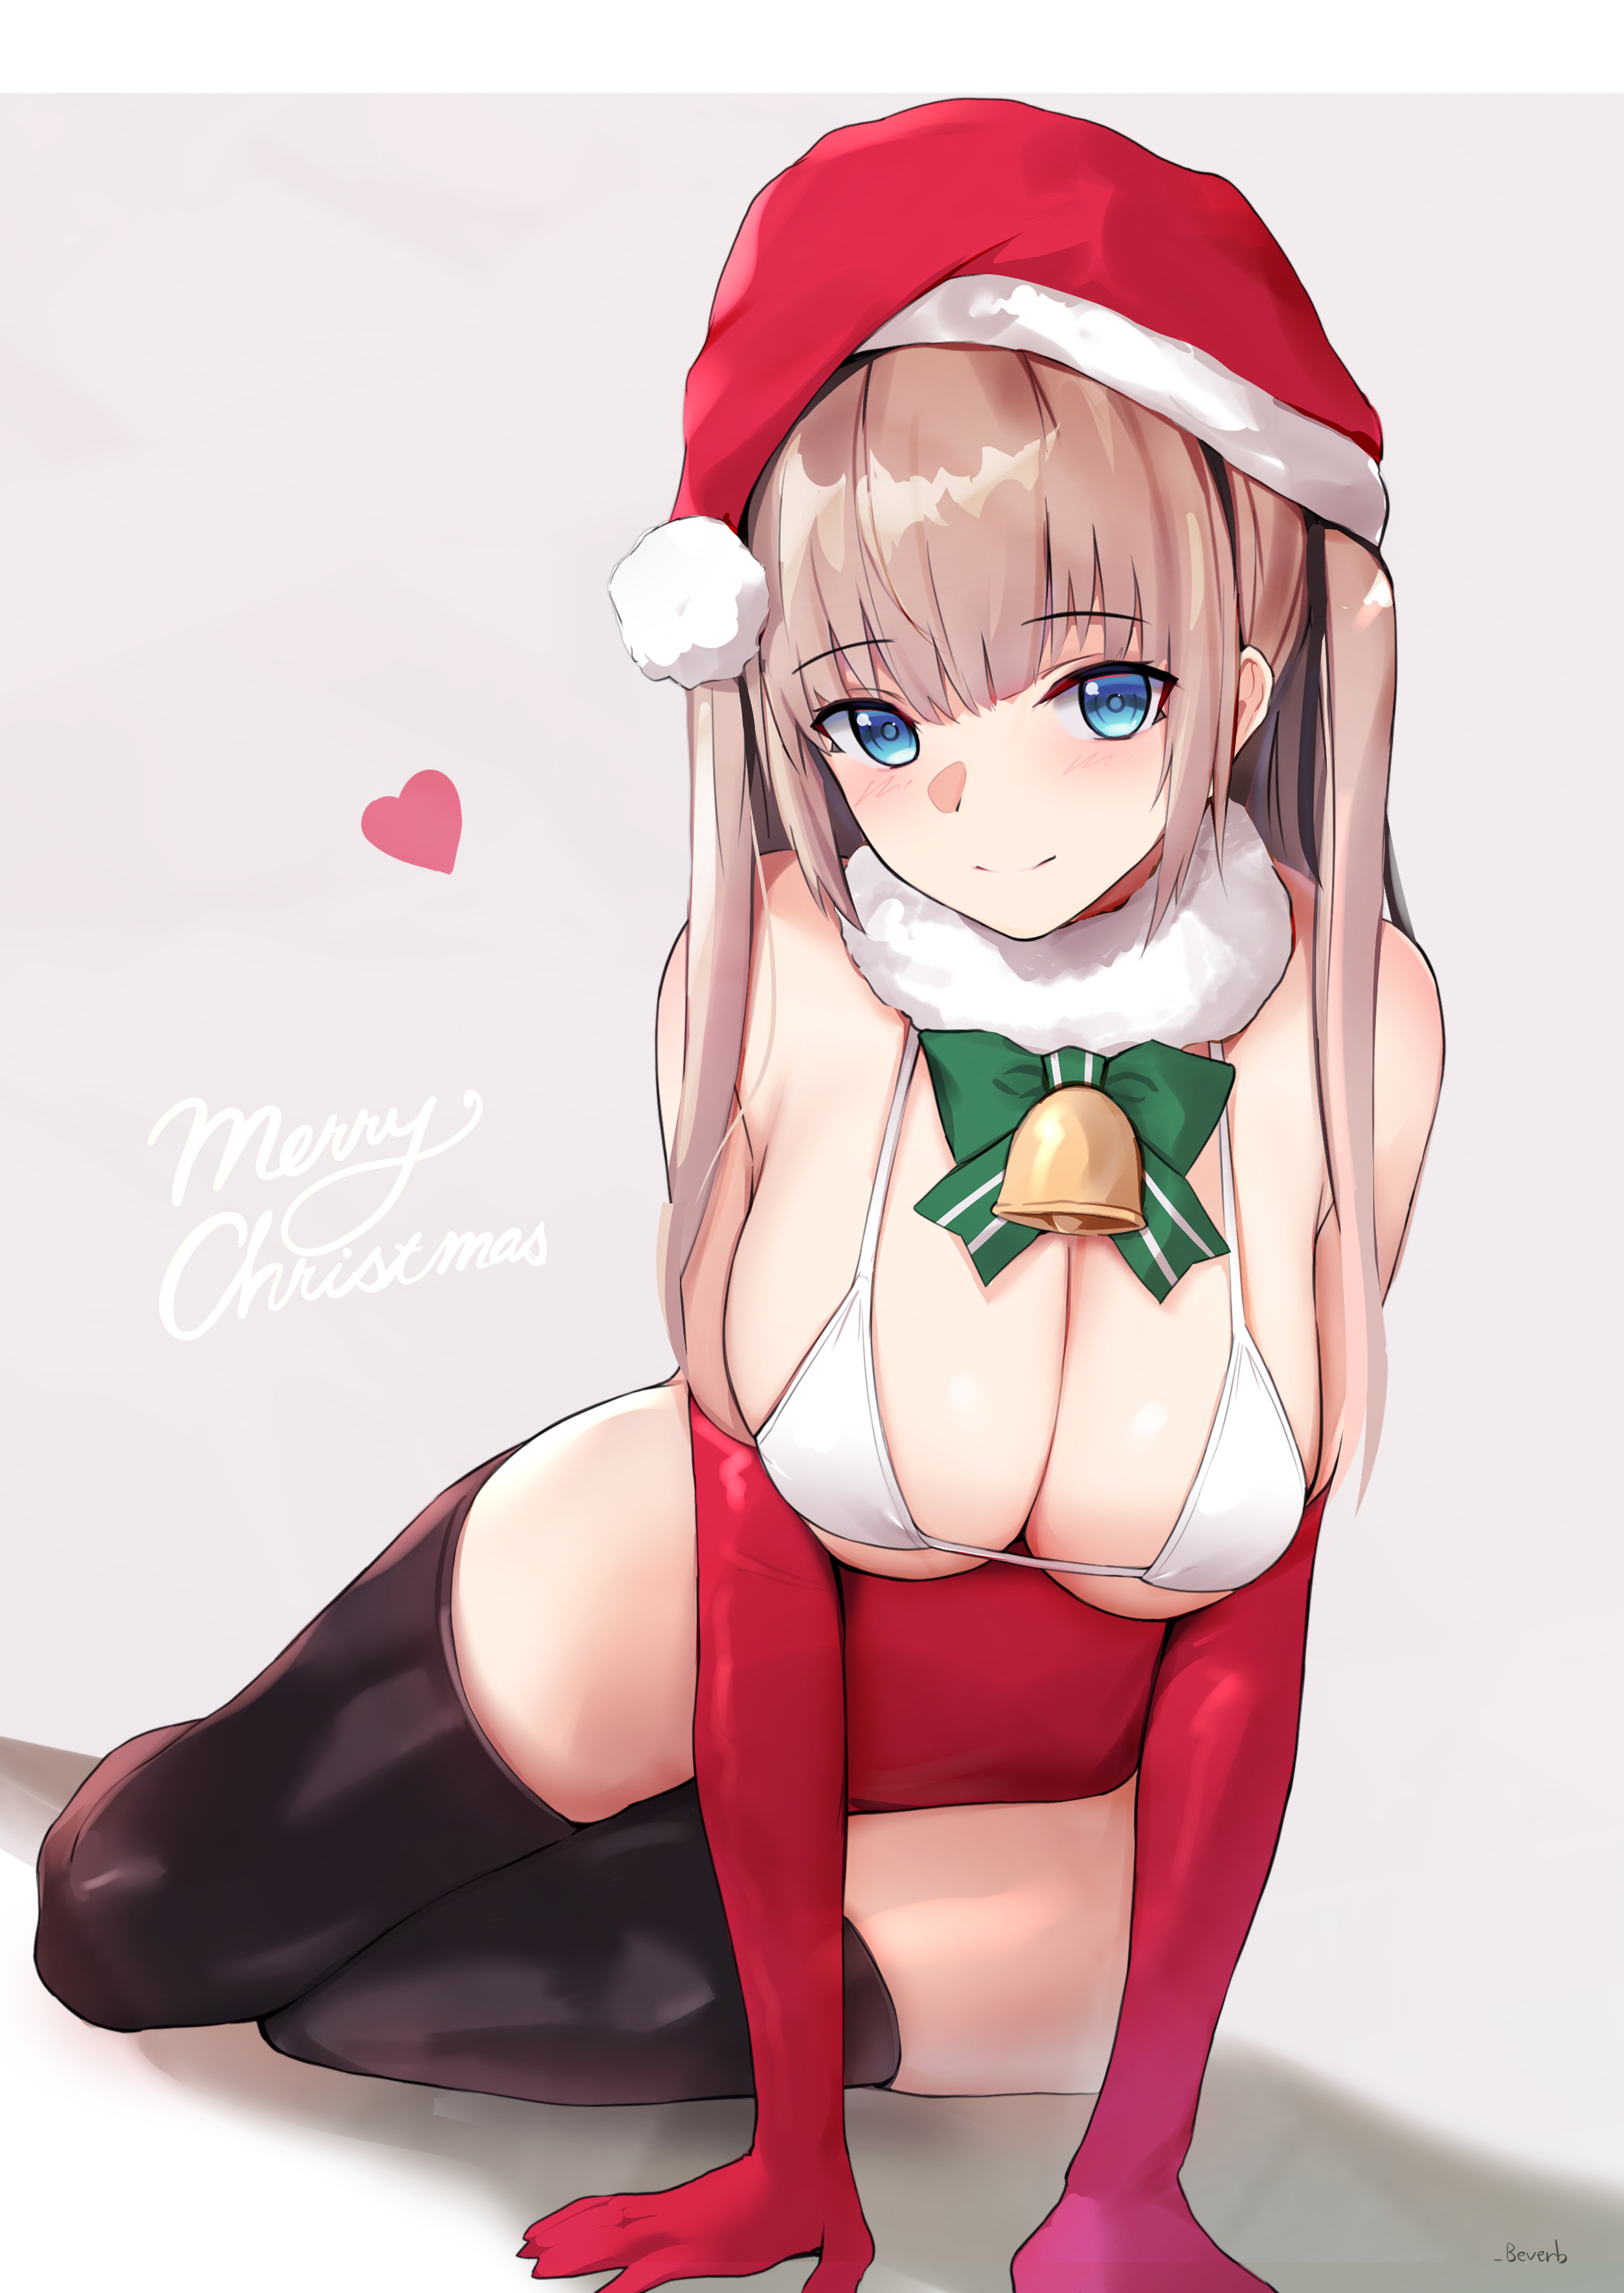 Anime 2508x3541 anime anime girls digital art artwork 2D portrait display cleavage big boobs blue eyes brunette thigh-highs bikini top Santa hats Santa girl bent over Christmas Bee Doushi